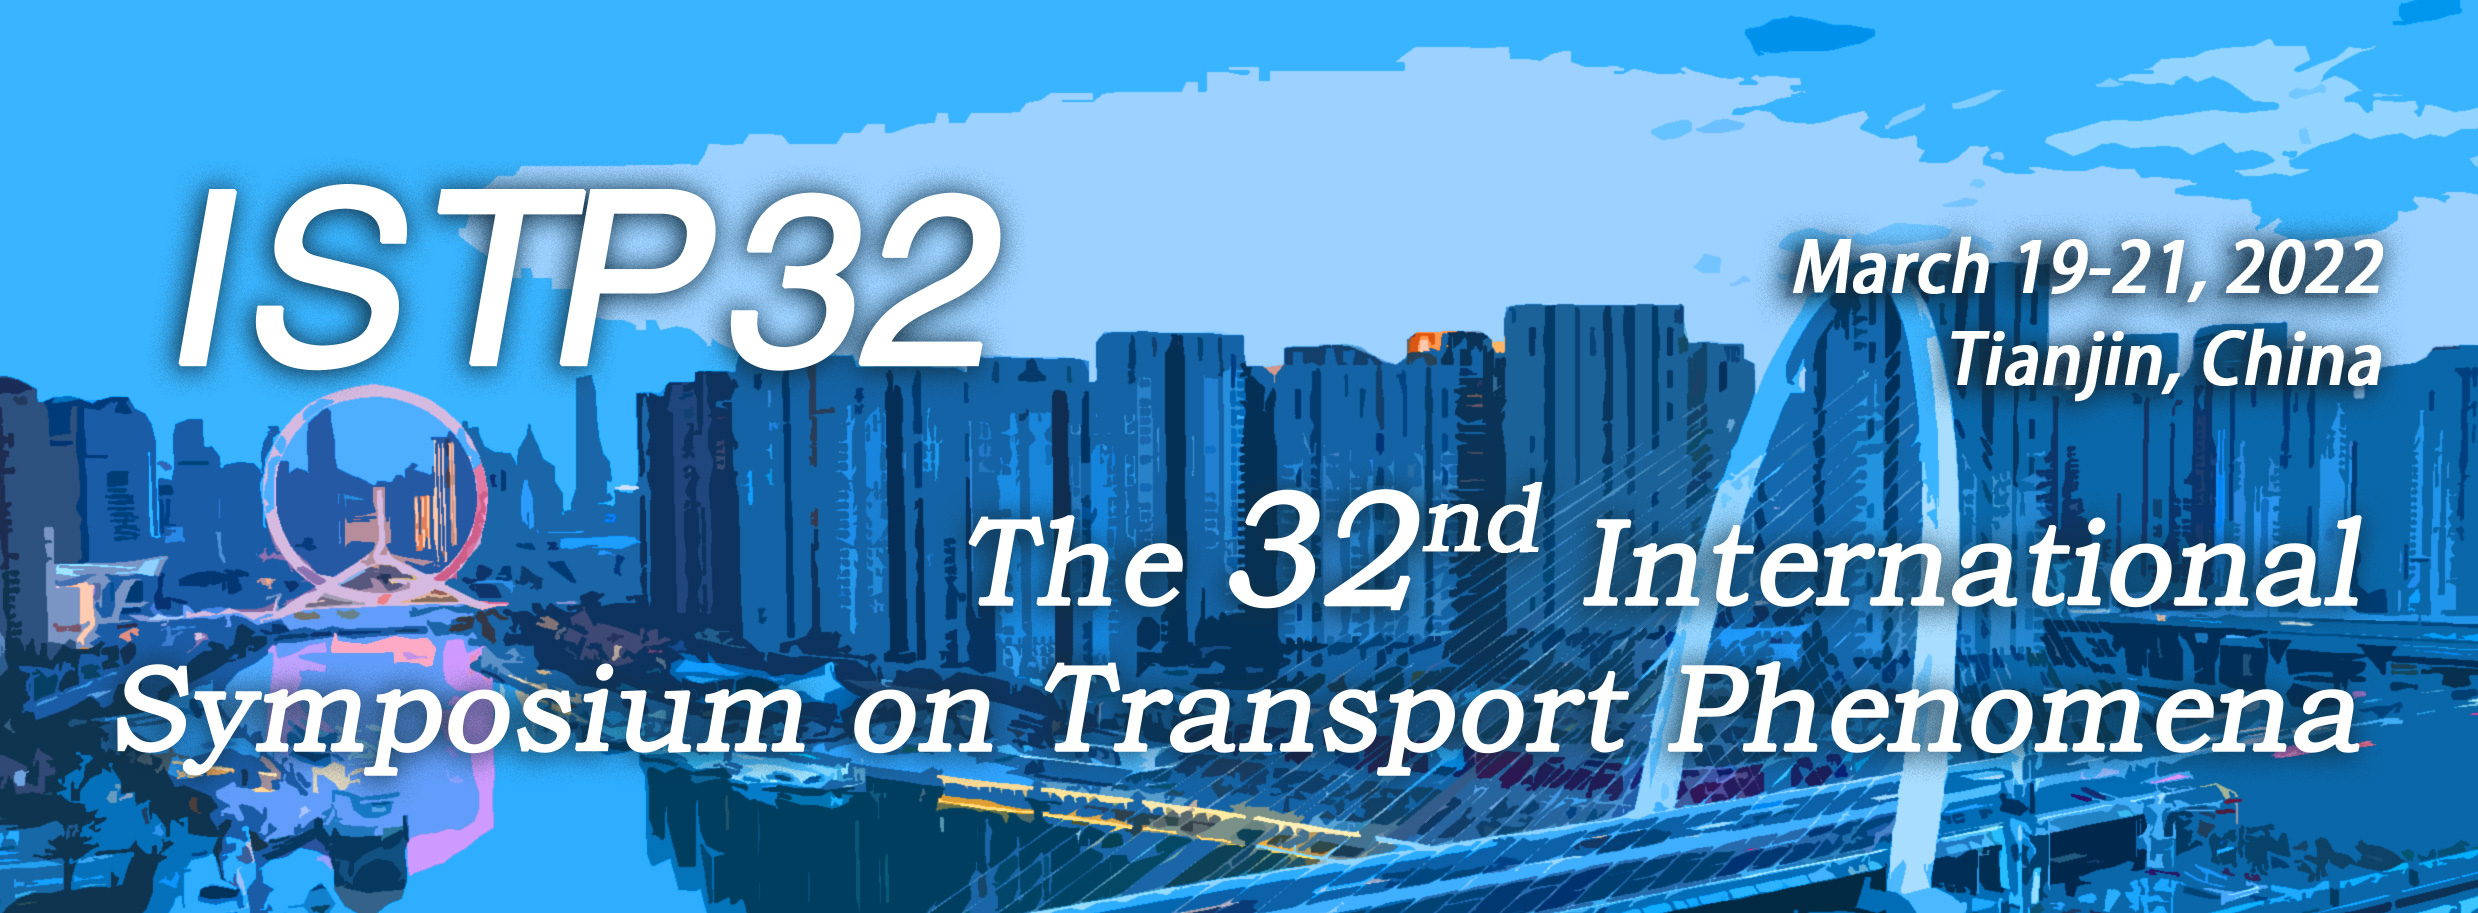 The 32nd International Symposium on Transport Phenomena